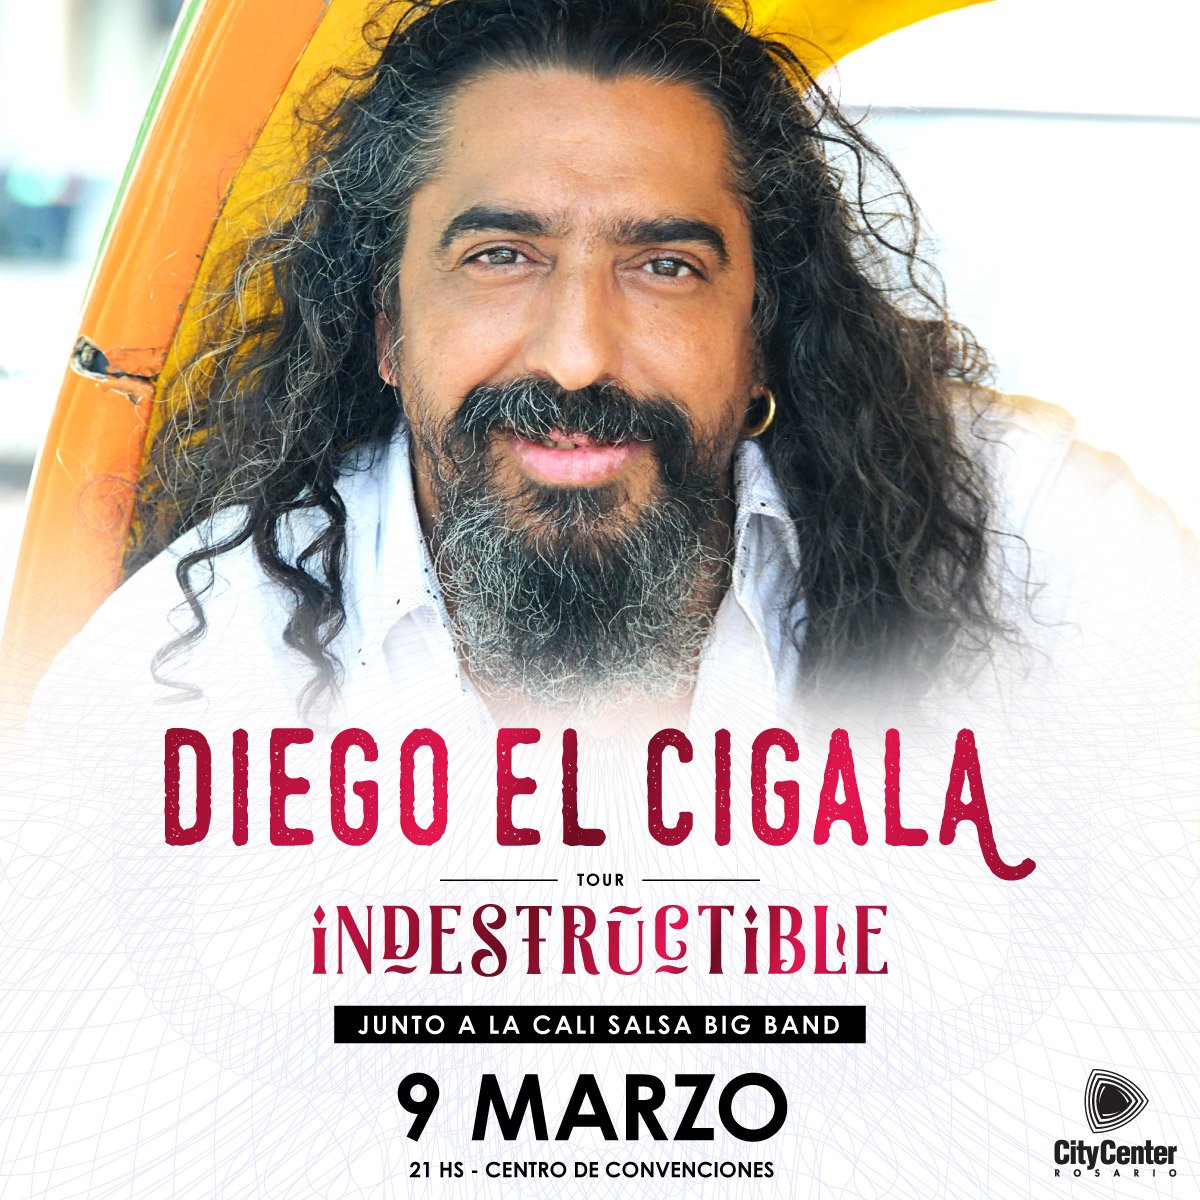 تويتر \ City Center Rosario على تويتر: "El 9/03 Diego El Cigala vuelve a  City Center Rosario para presentar su nuevo álbum #Indestructible junto a  La Cali Salsa Big Band. 🎫 Adquirí